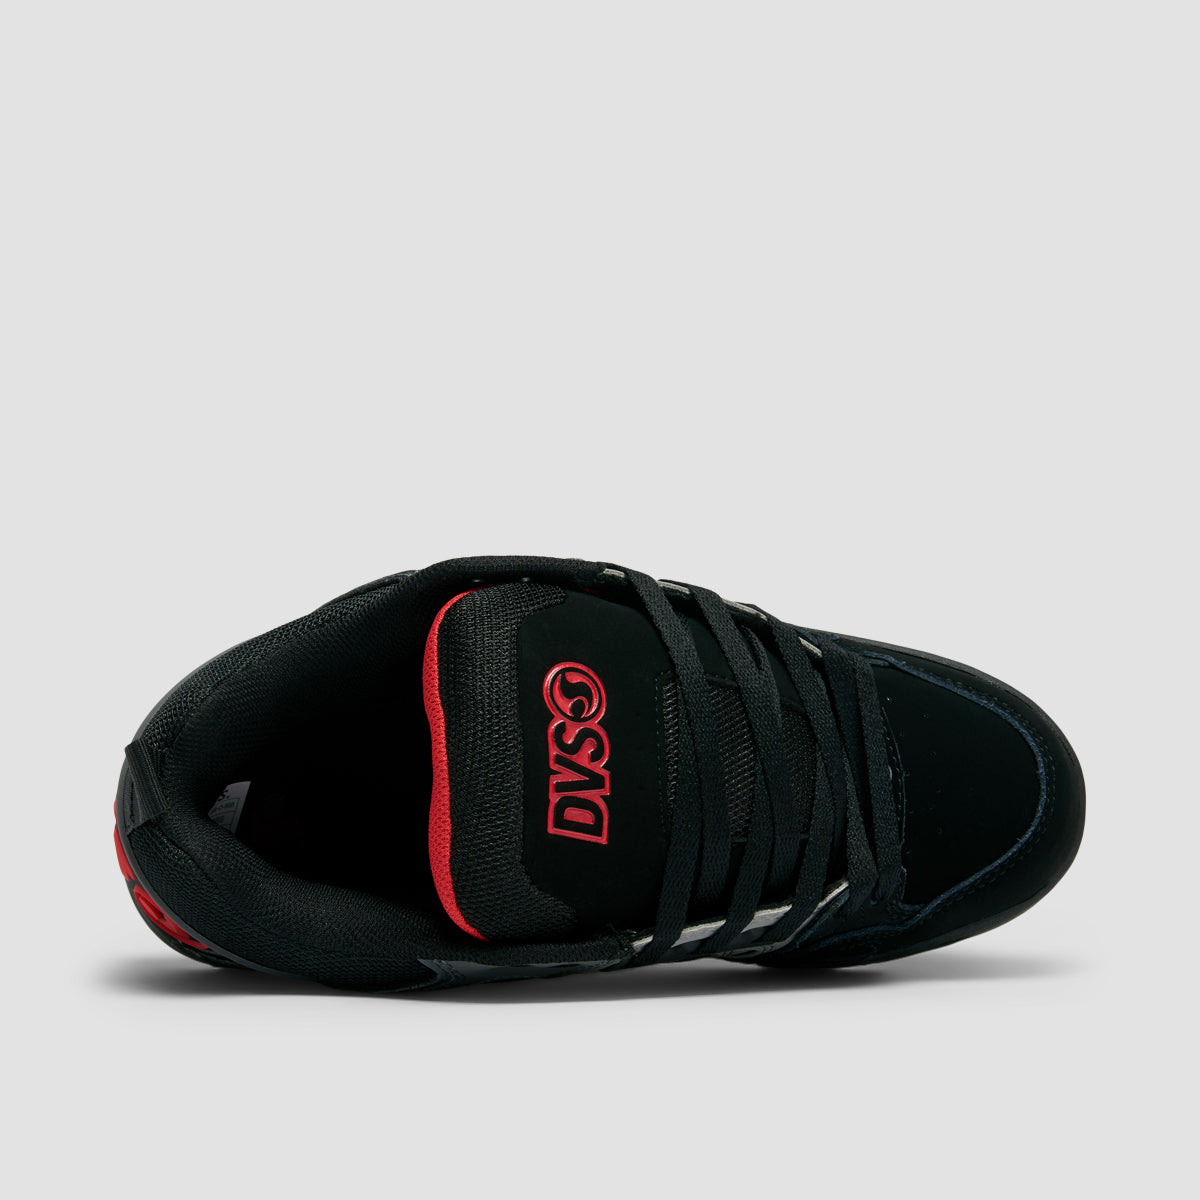 DVS Comanche Shoes - Black/Charcoal/Red Nubuck